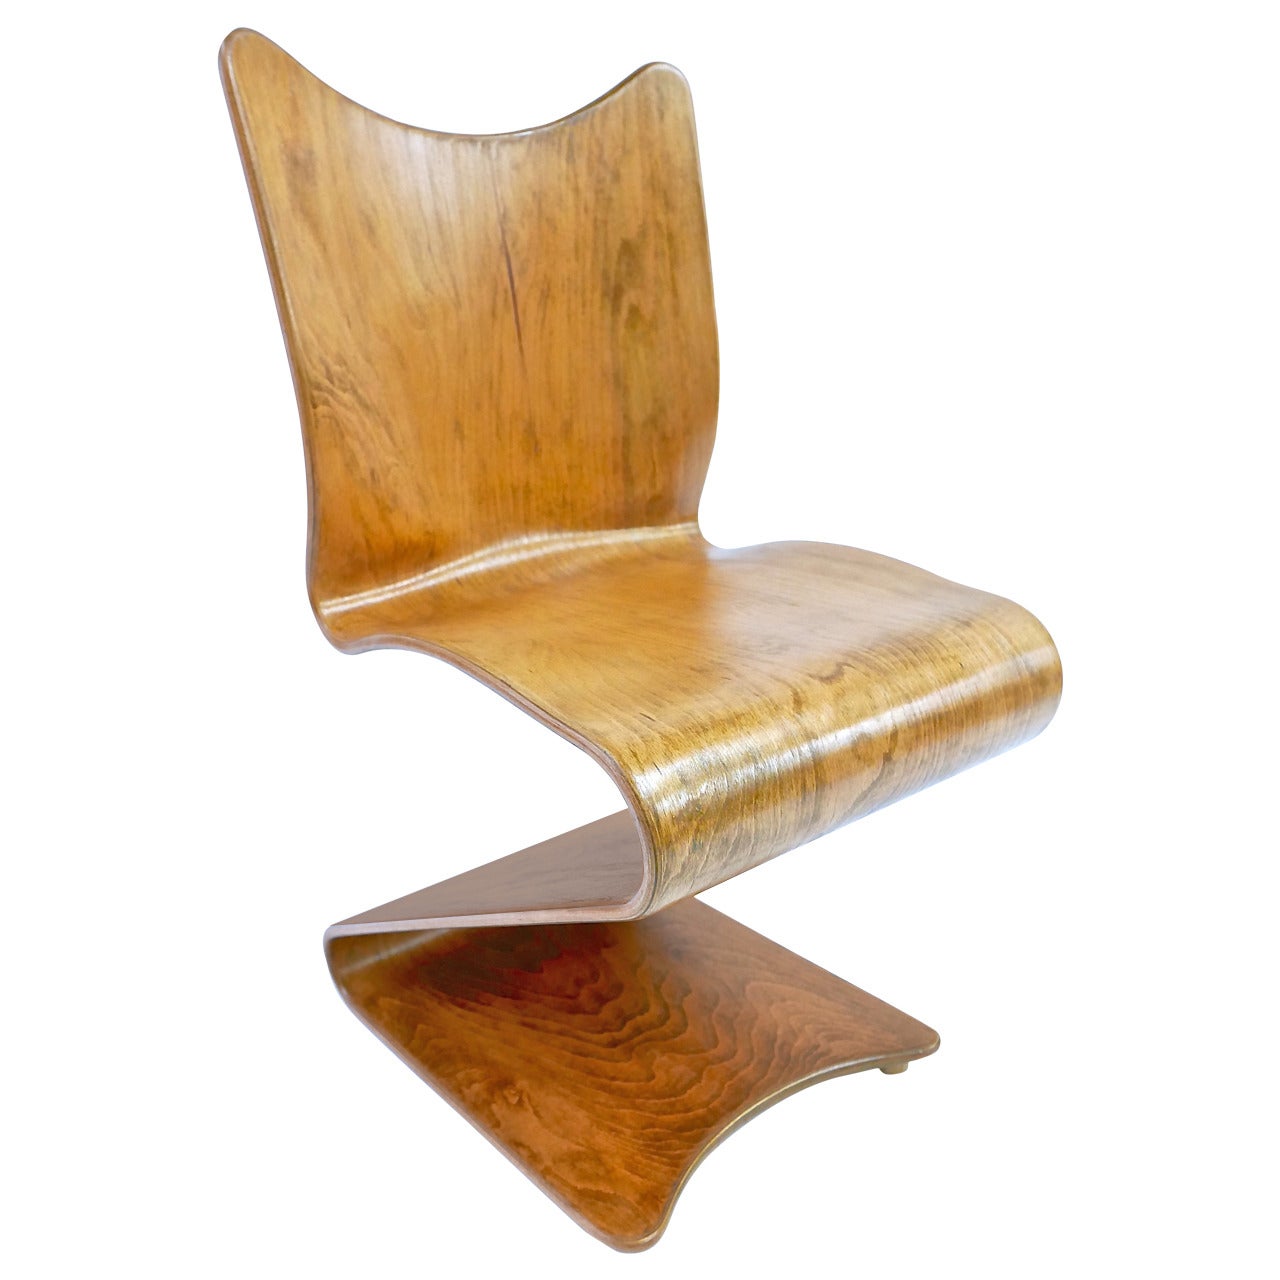 Verner Panton "S-Chair" for Thonet